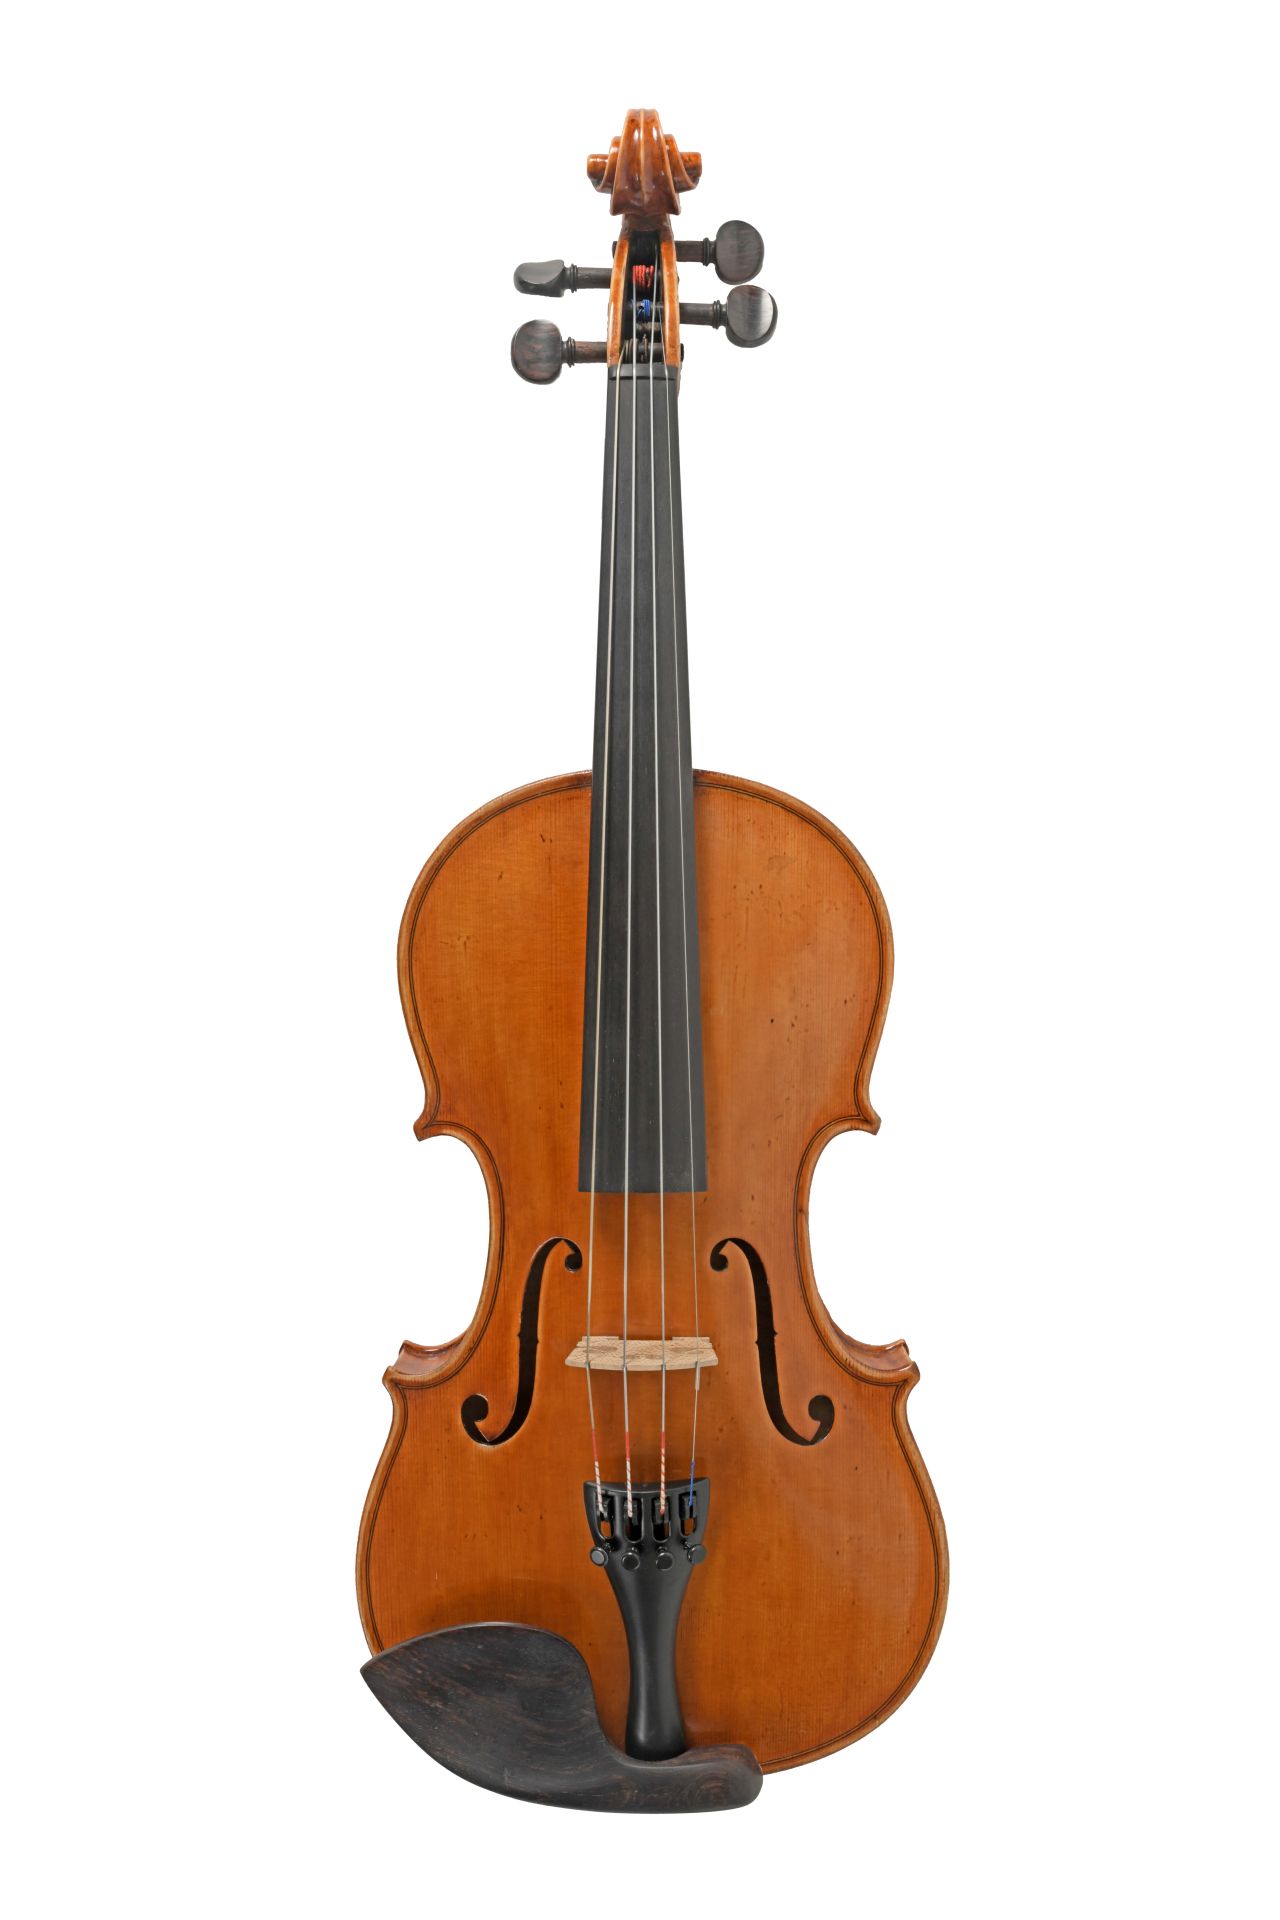 Sandor Elek violin